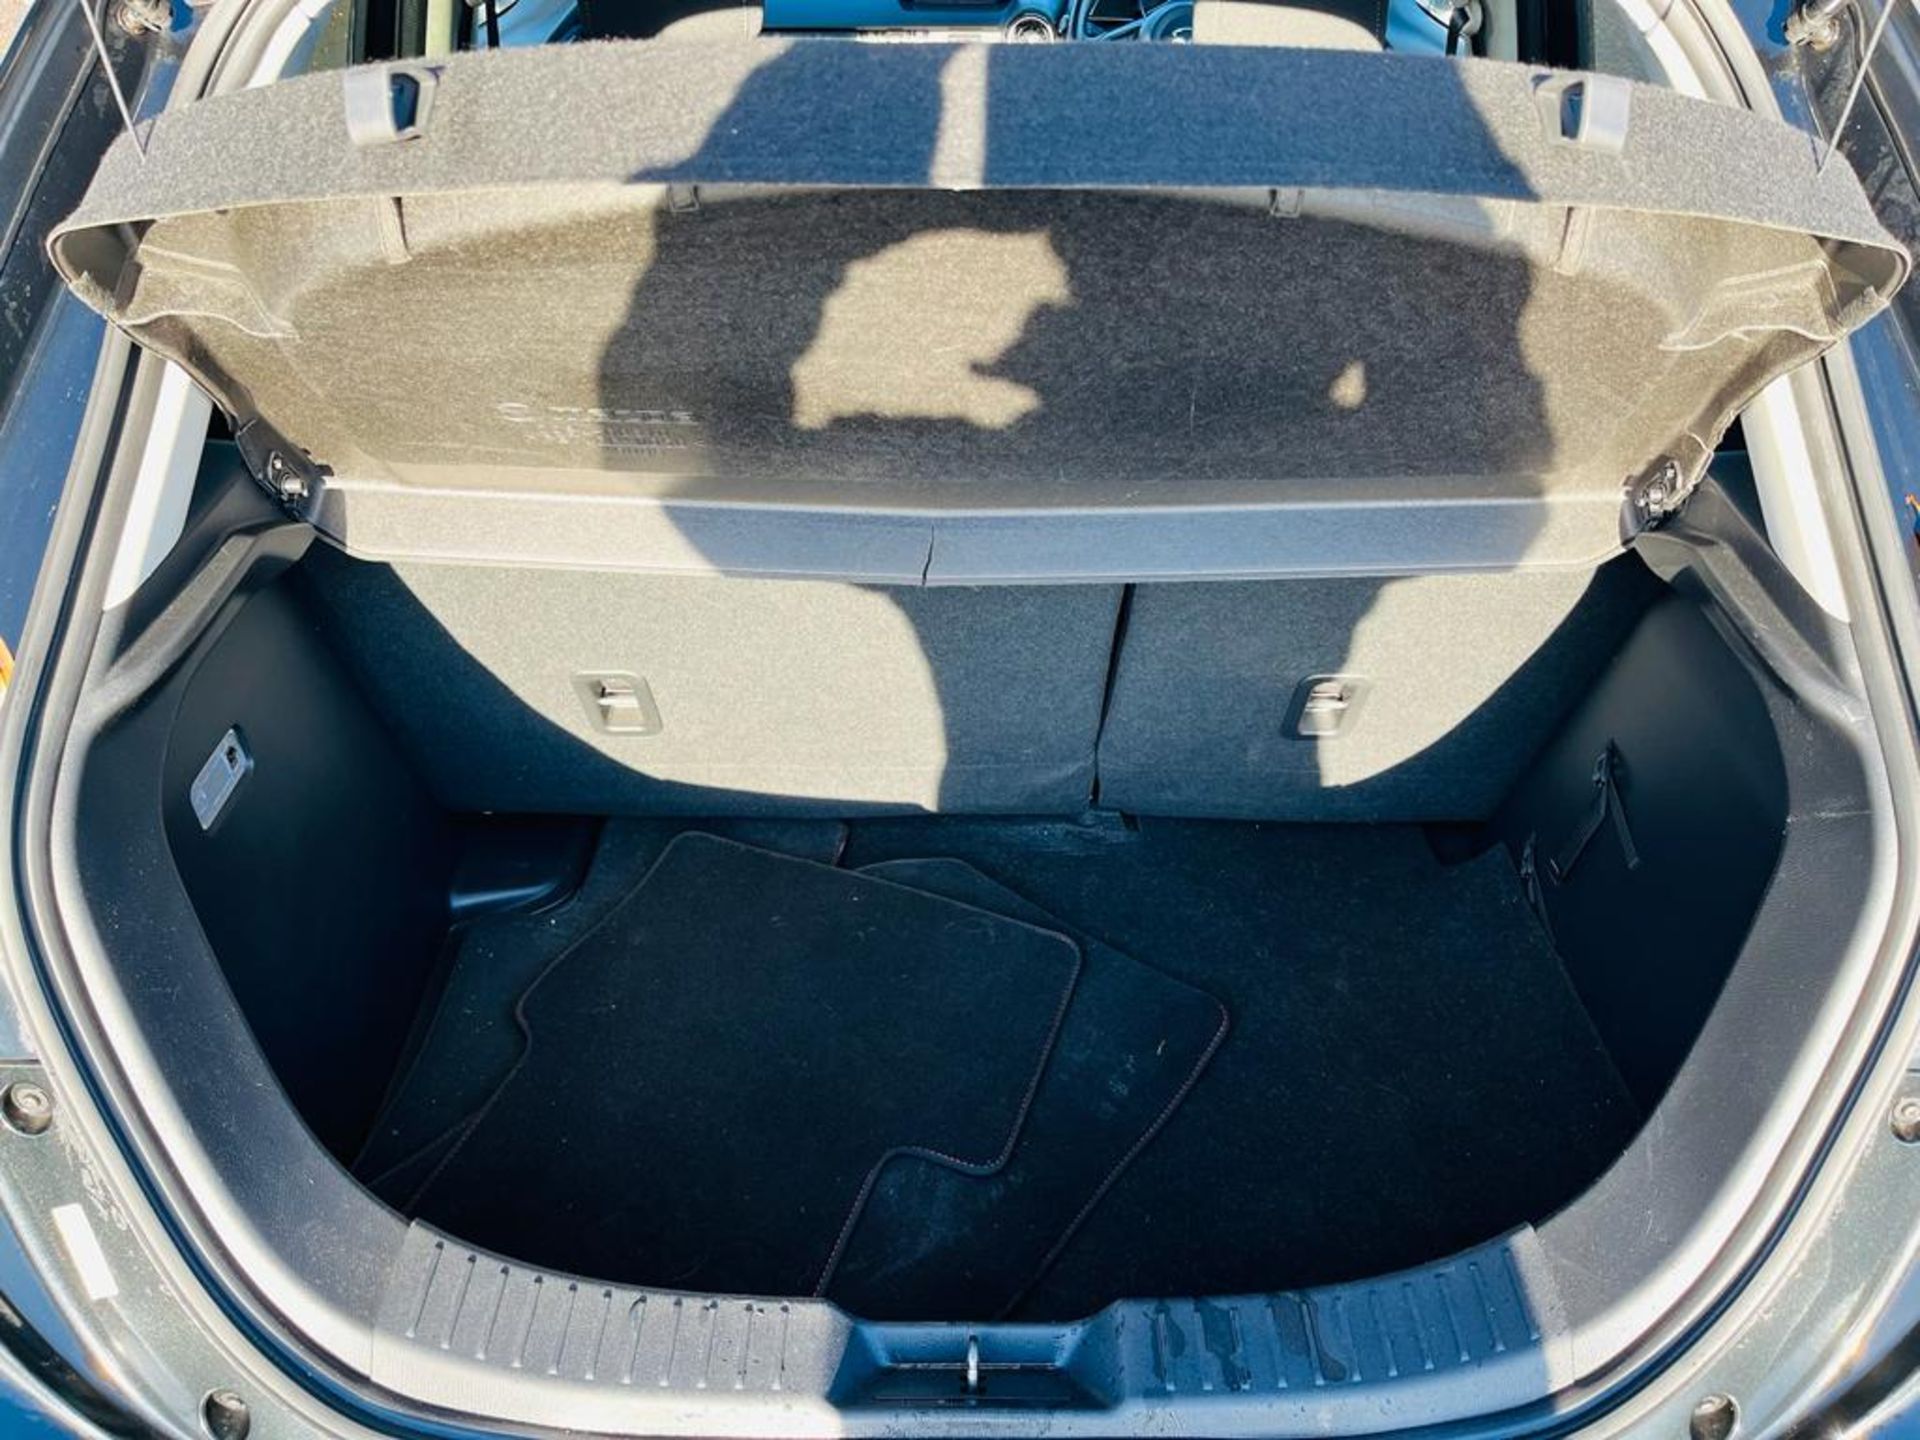 ** ON SALE ** Mazda 2 1.5 90 Sport Nav+ Hatchback 2019 '19 Reg' A/C - ULEZ Compliant - Image 8 of 35